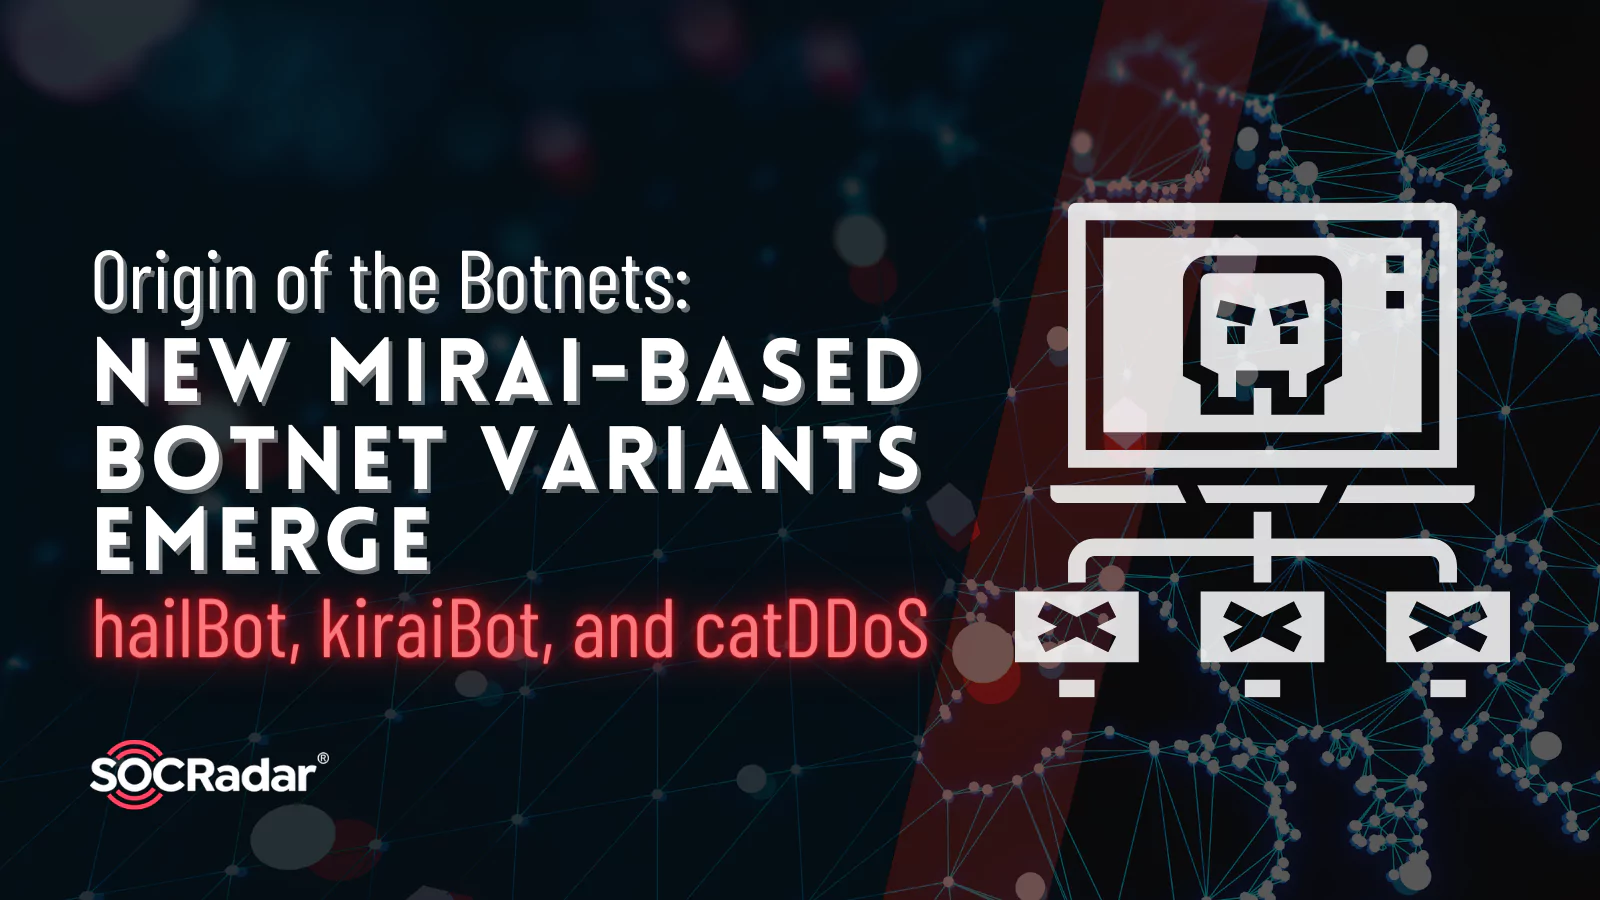 SOCRadar® Cyber Intelligence Inc. | Origin of the Botnets: New Mirai-based Botnet Variants Emerge (hailBot, kiraiBot, and catDDoS)